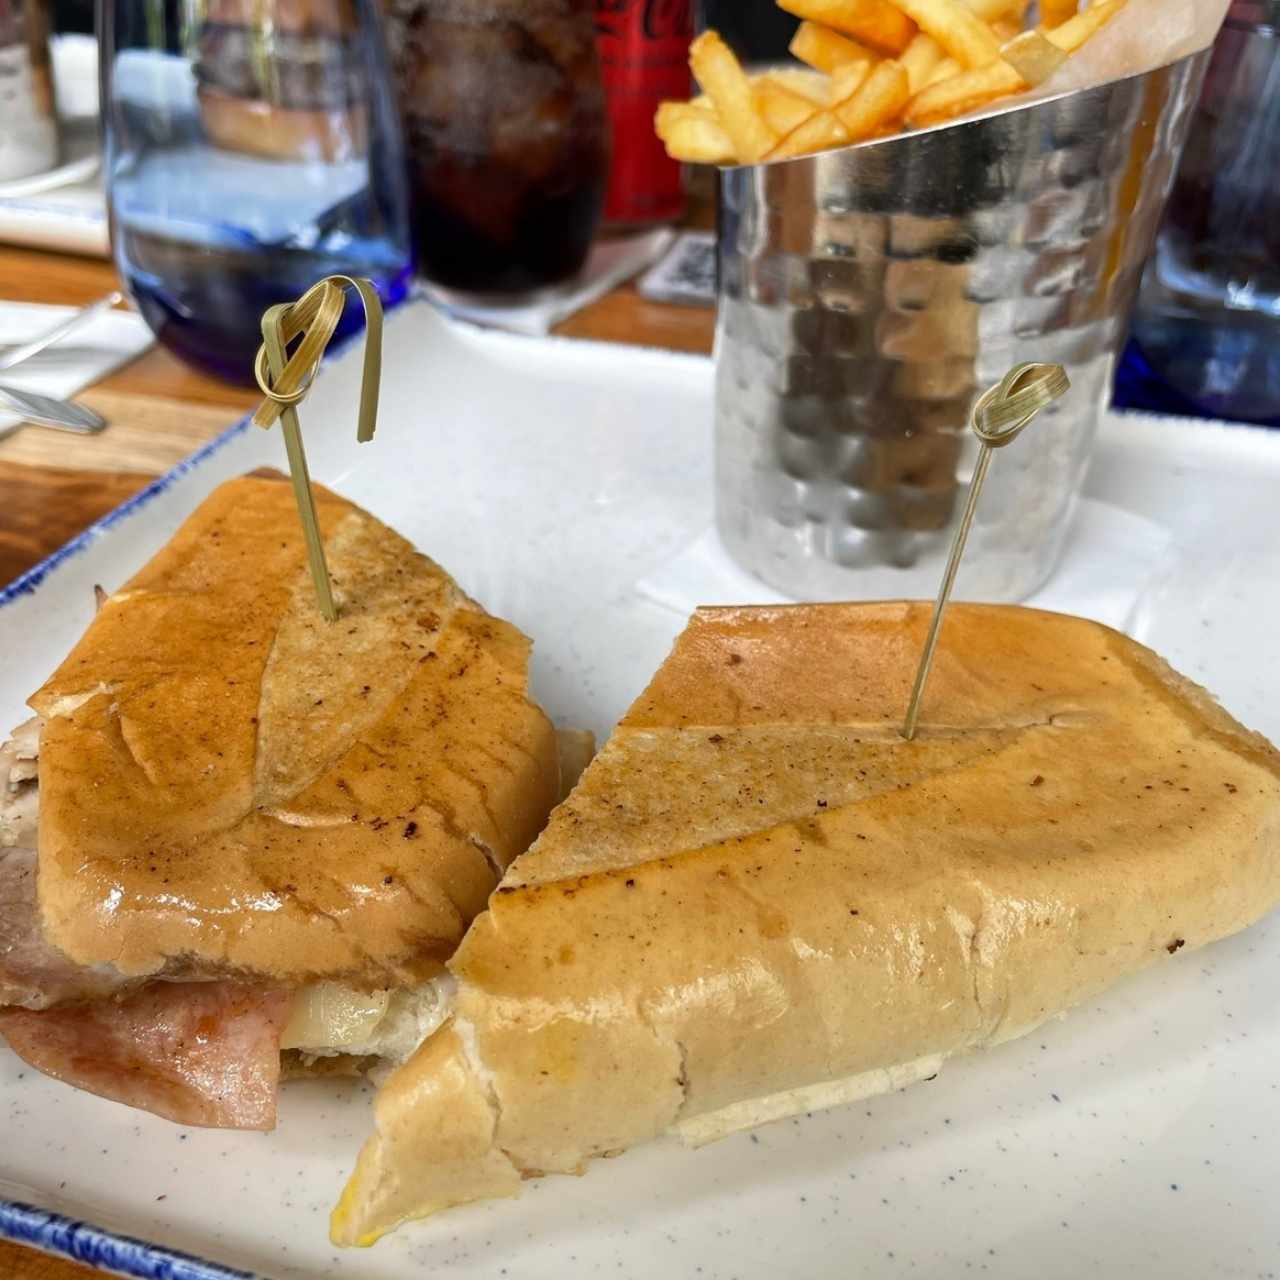 Sandwich cubano